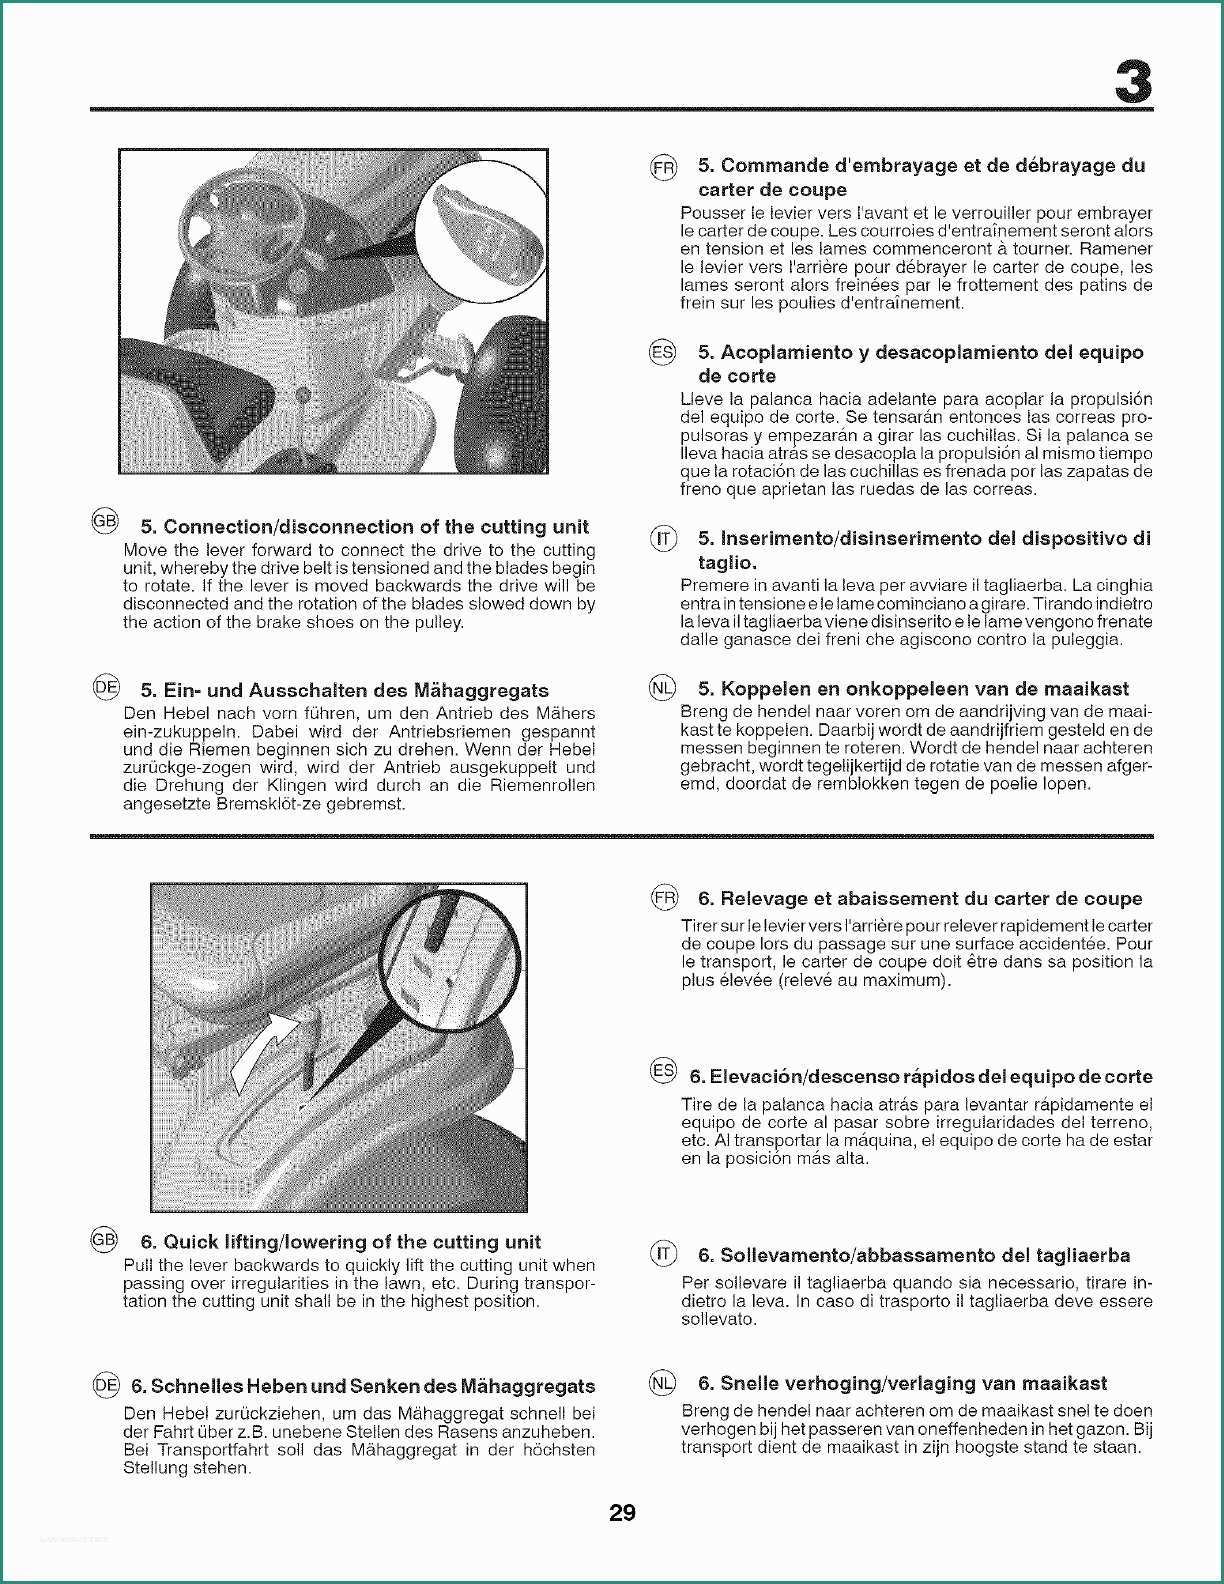 Maximum Depuratori Acqua E Craftsman User Manual Tractor Manuals and Guides L